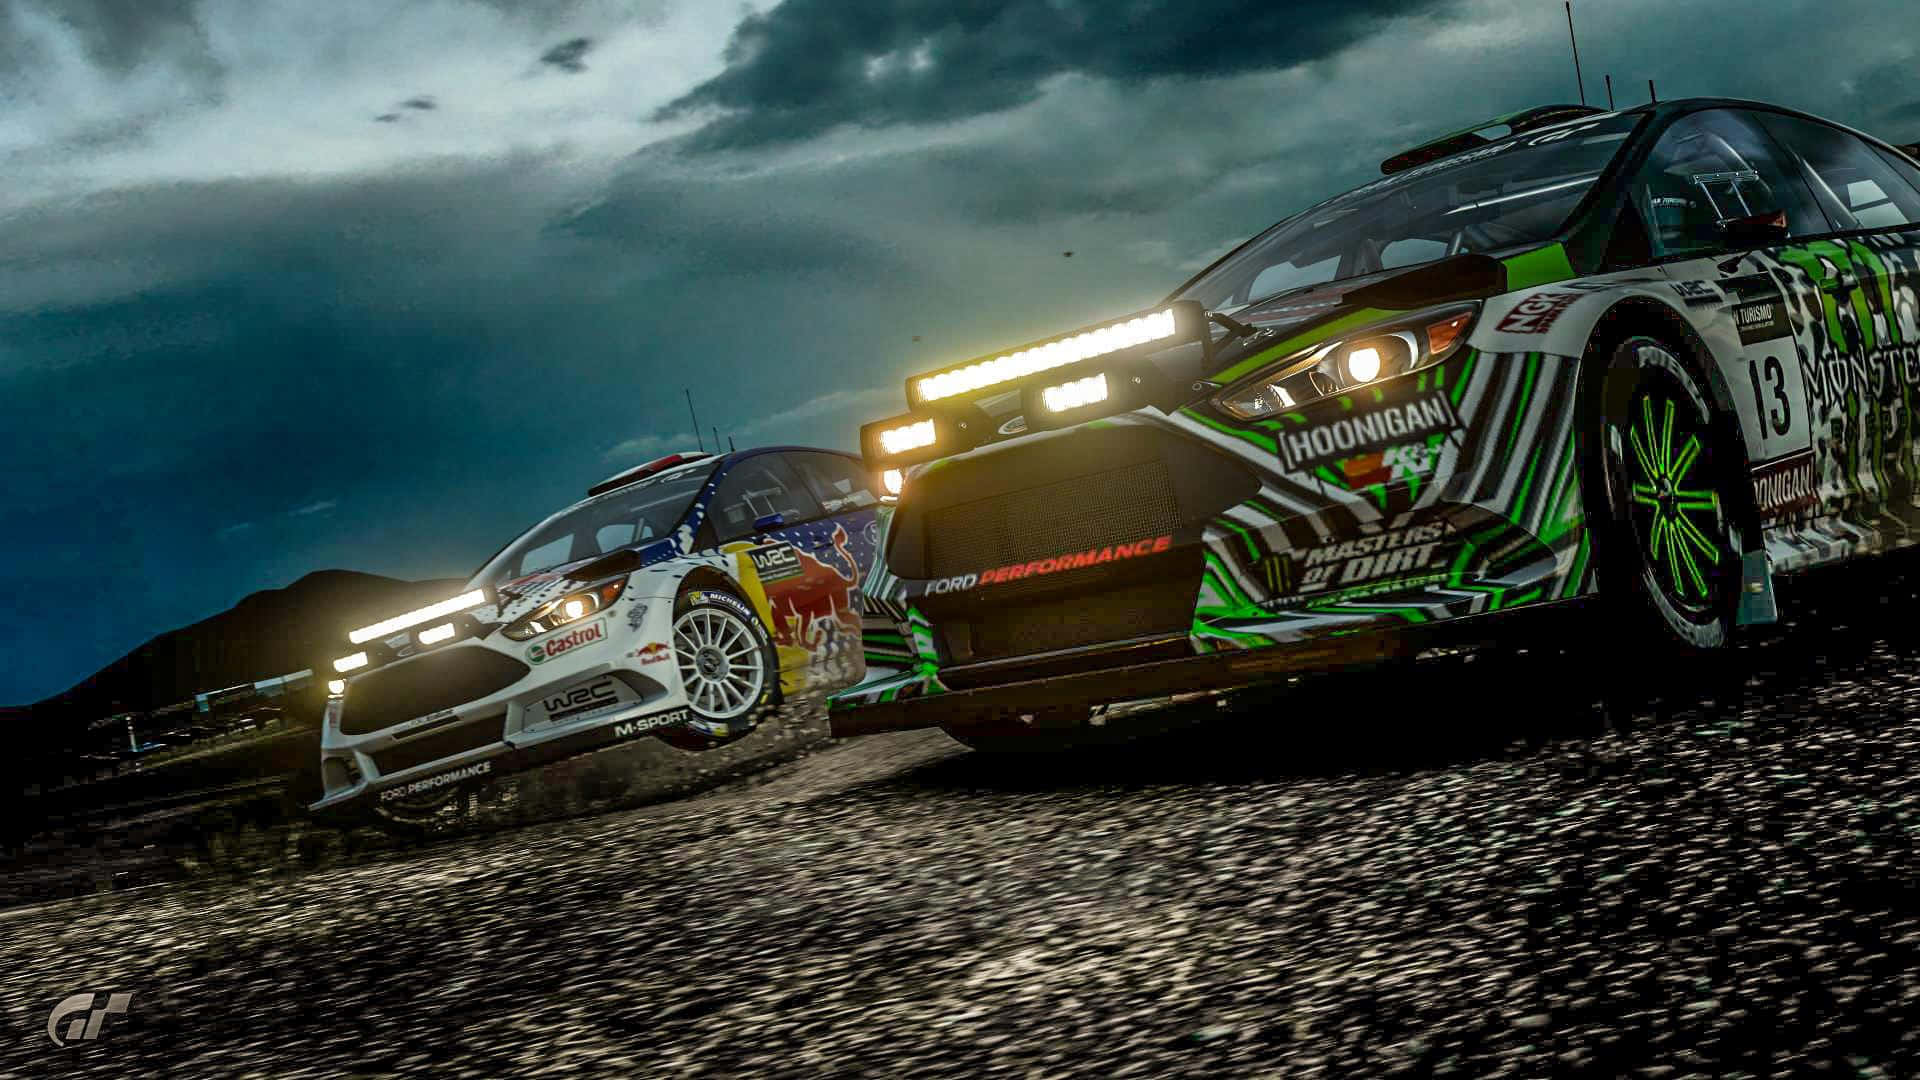 Vibrant HD Wallpaper of Dirt Showdown Racing